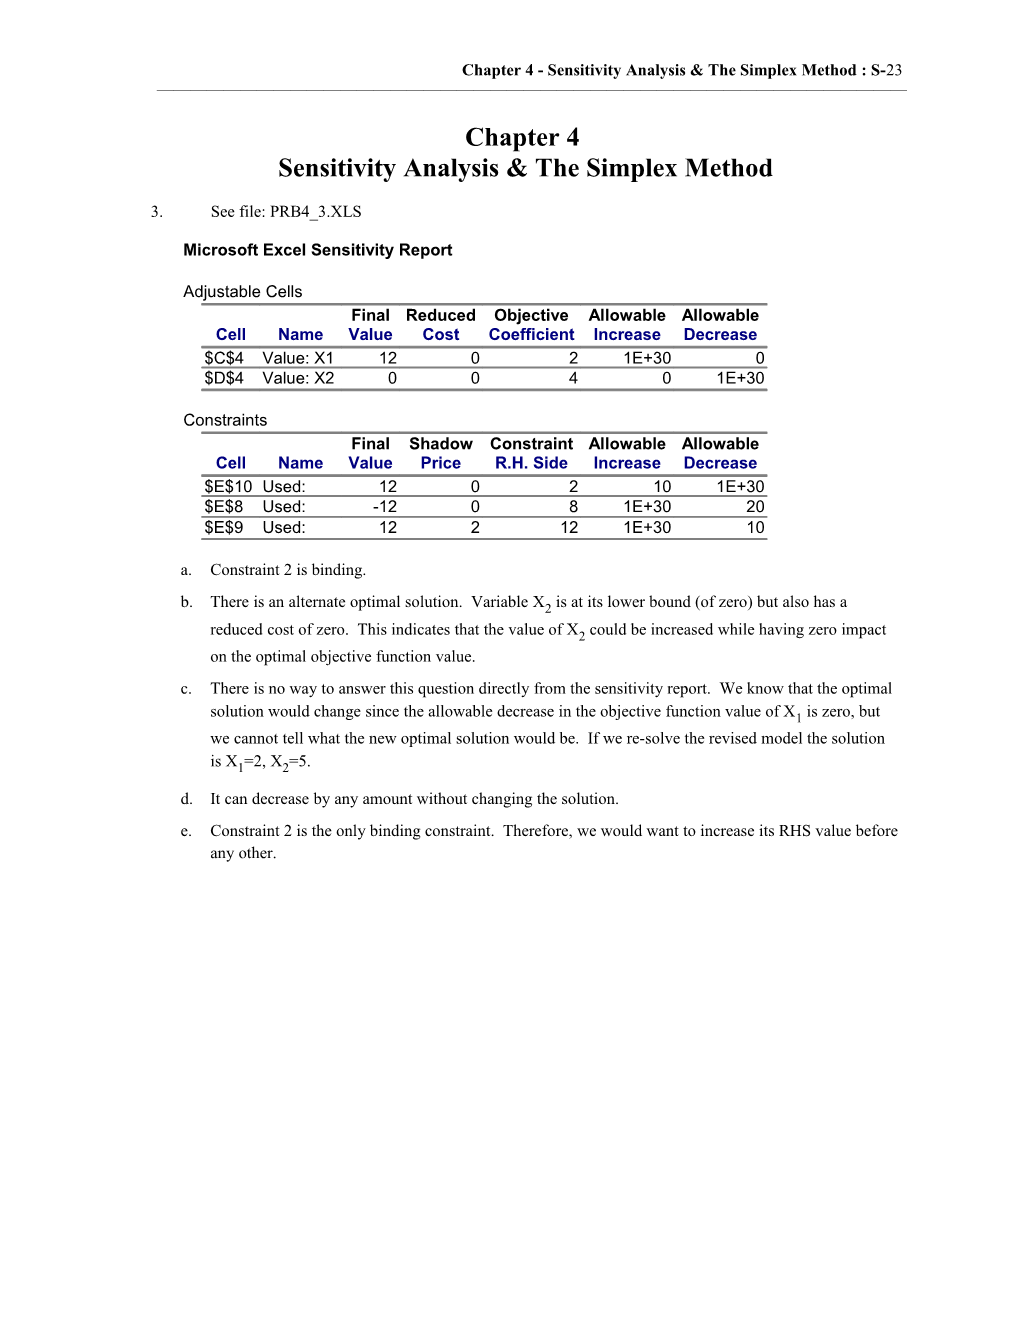 Sensitivity Analysis & the Simplex Method